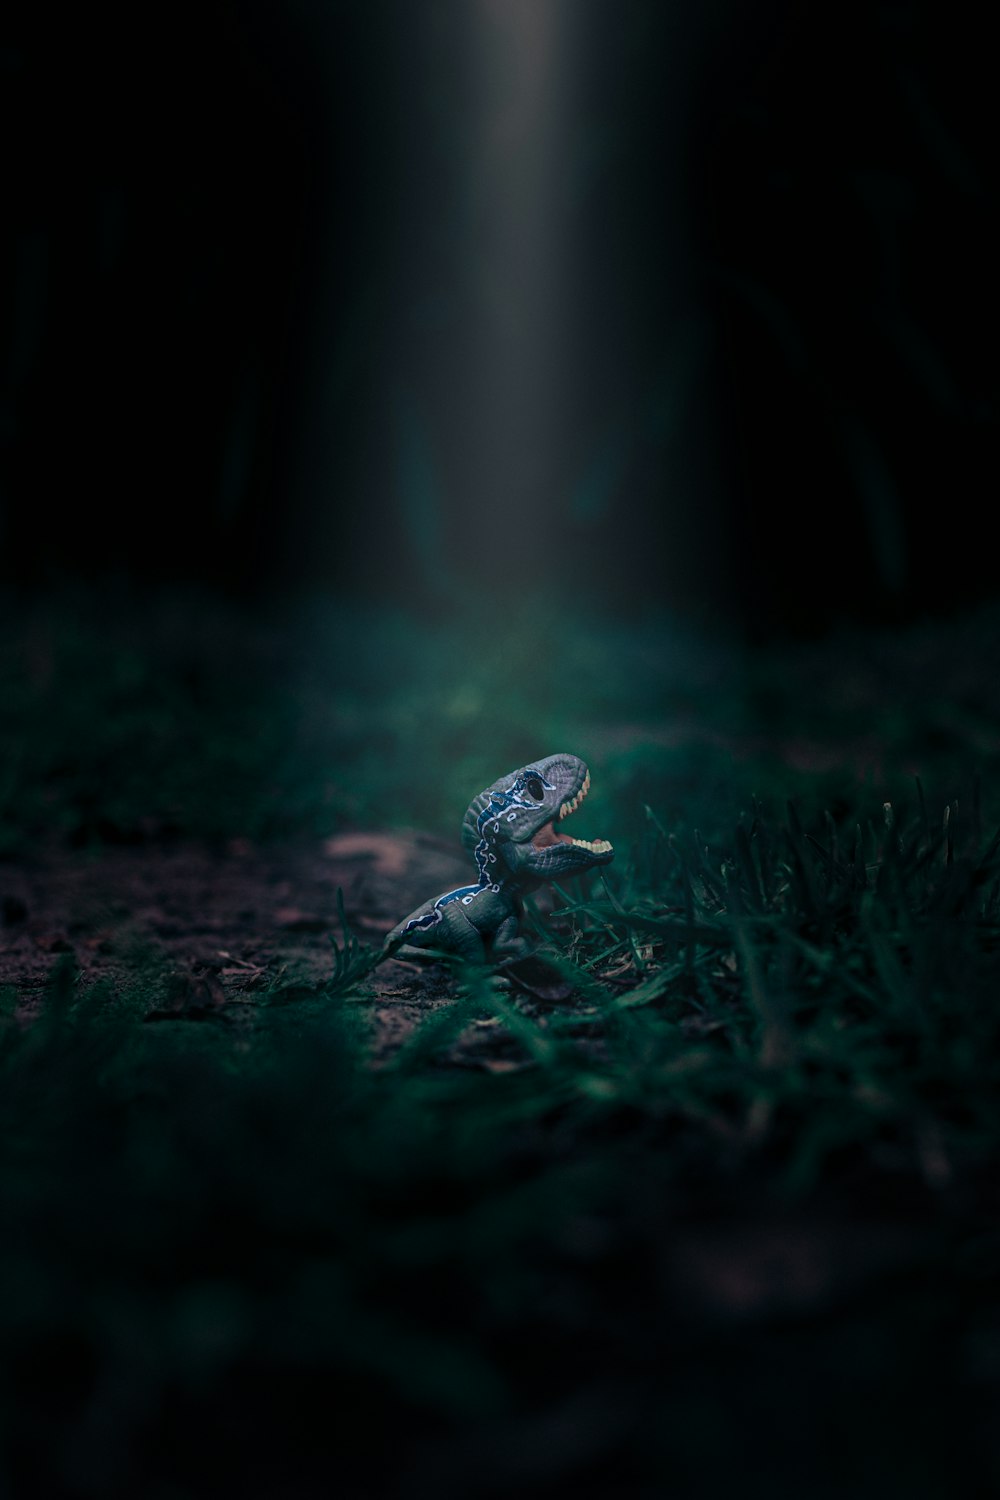 a lizard sitting on the ground in the dark